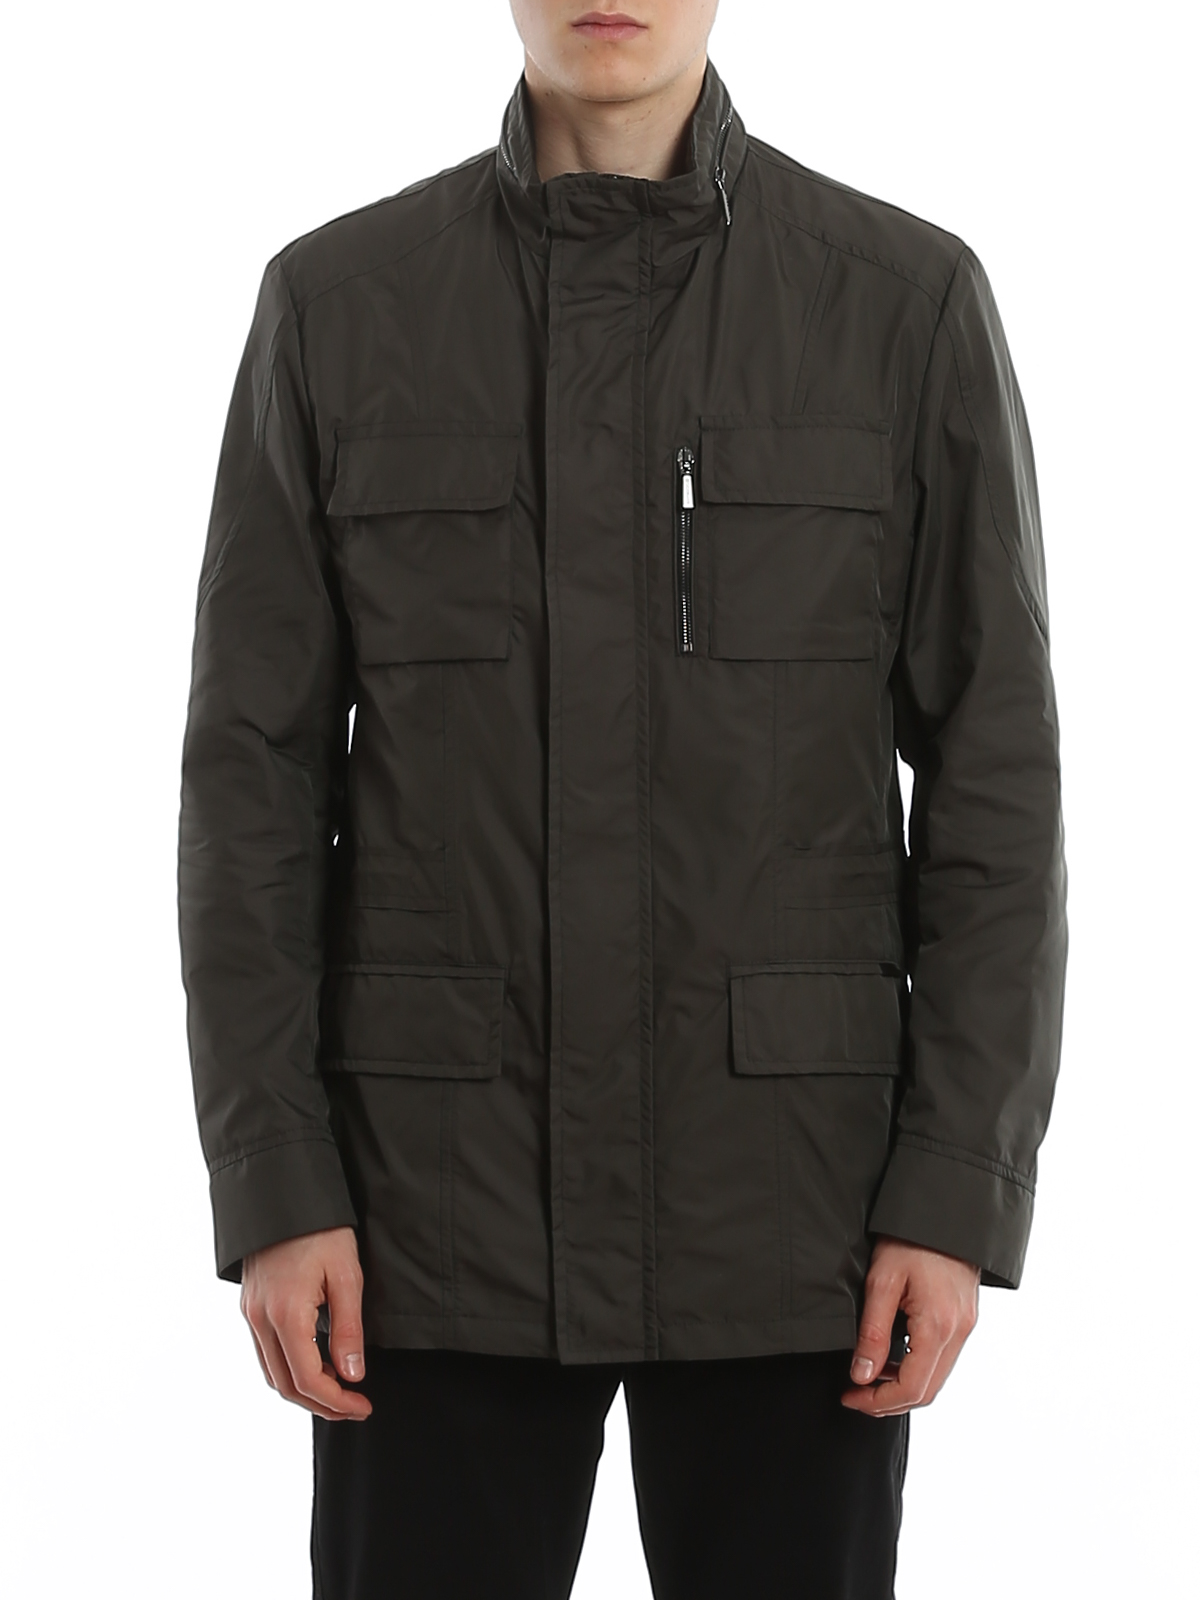 Casual jackets Moorer - Manolo field jacket - MANOLOKM1FOREST | iKRIX.com